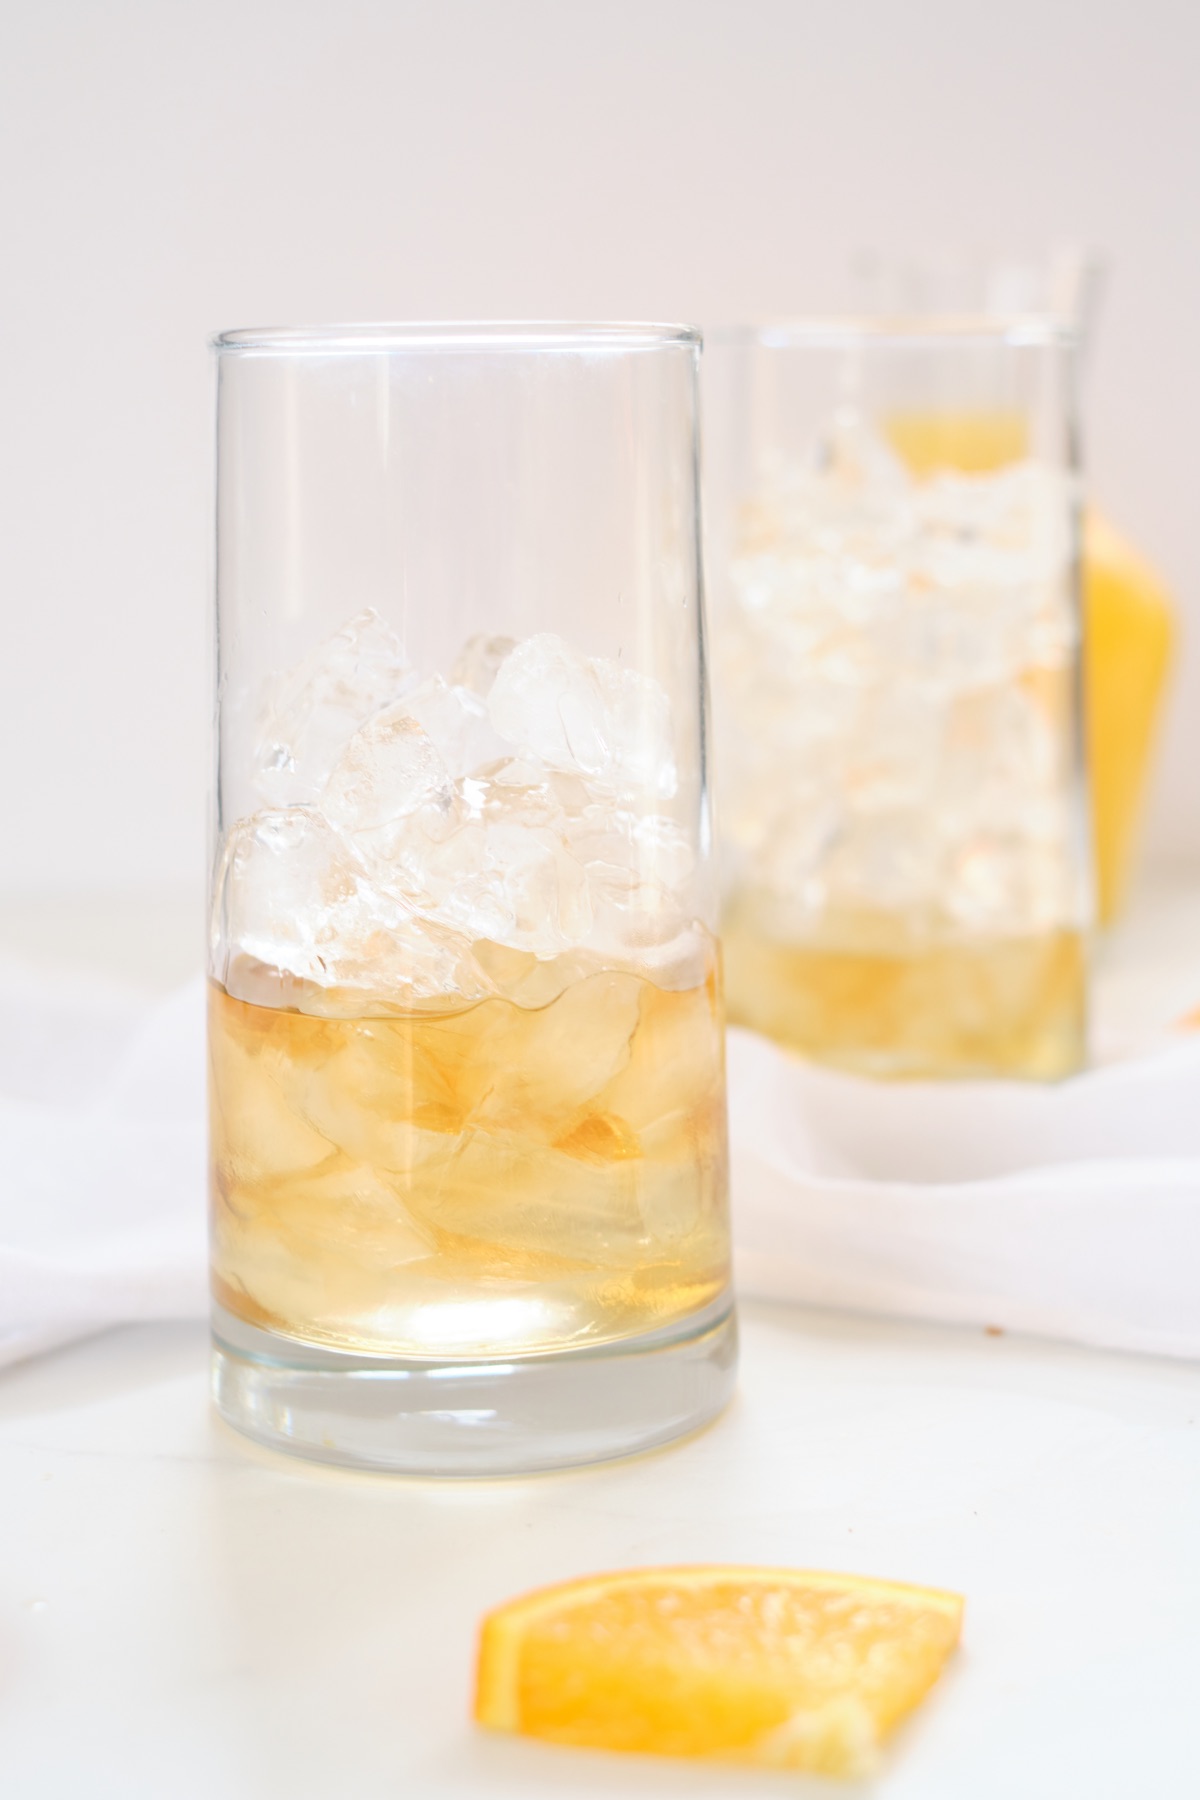 add rum to the glass of ice mai tai recipe